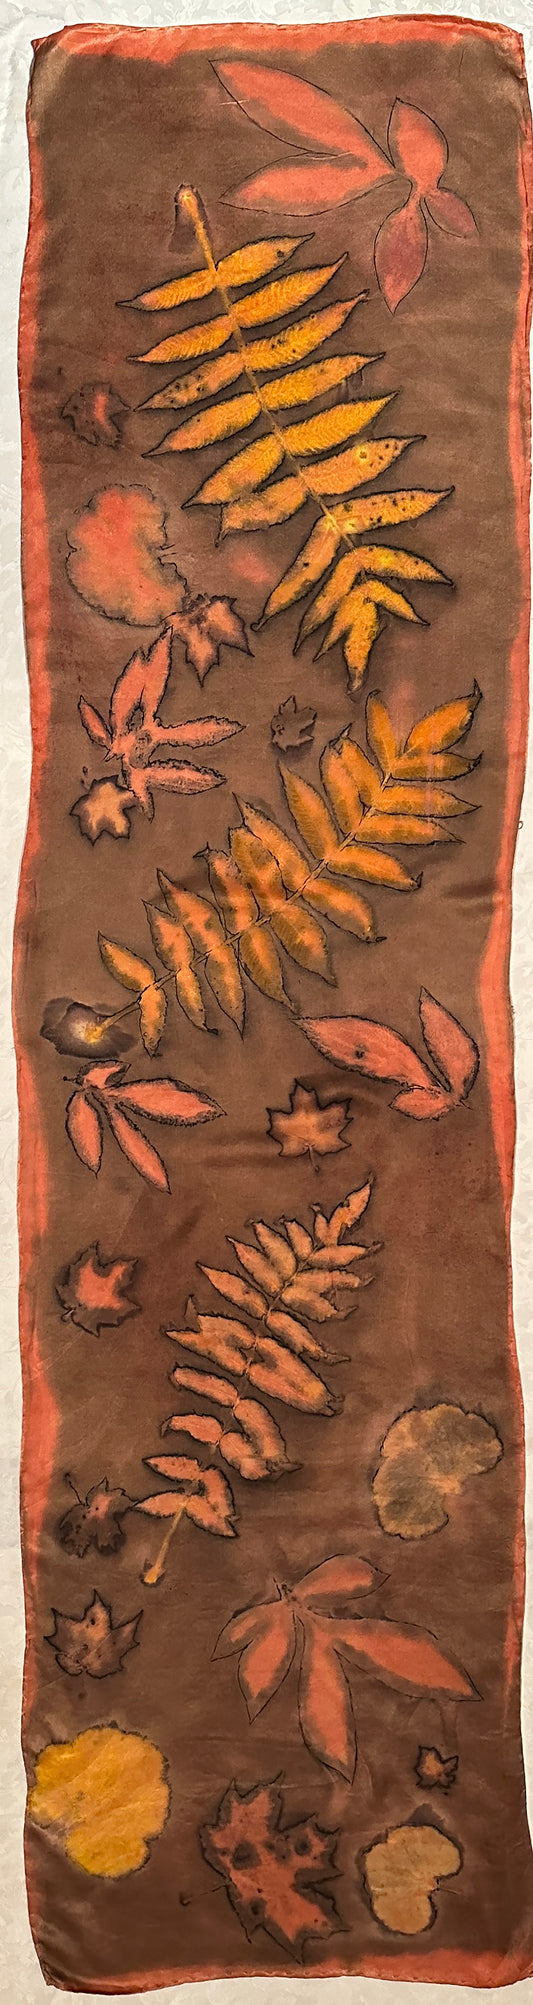 Botanical silk scarf 15" x 60" Madder and Turmeric_14